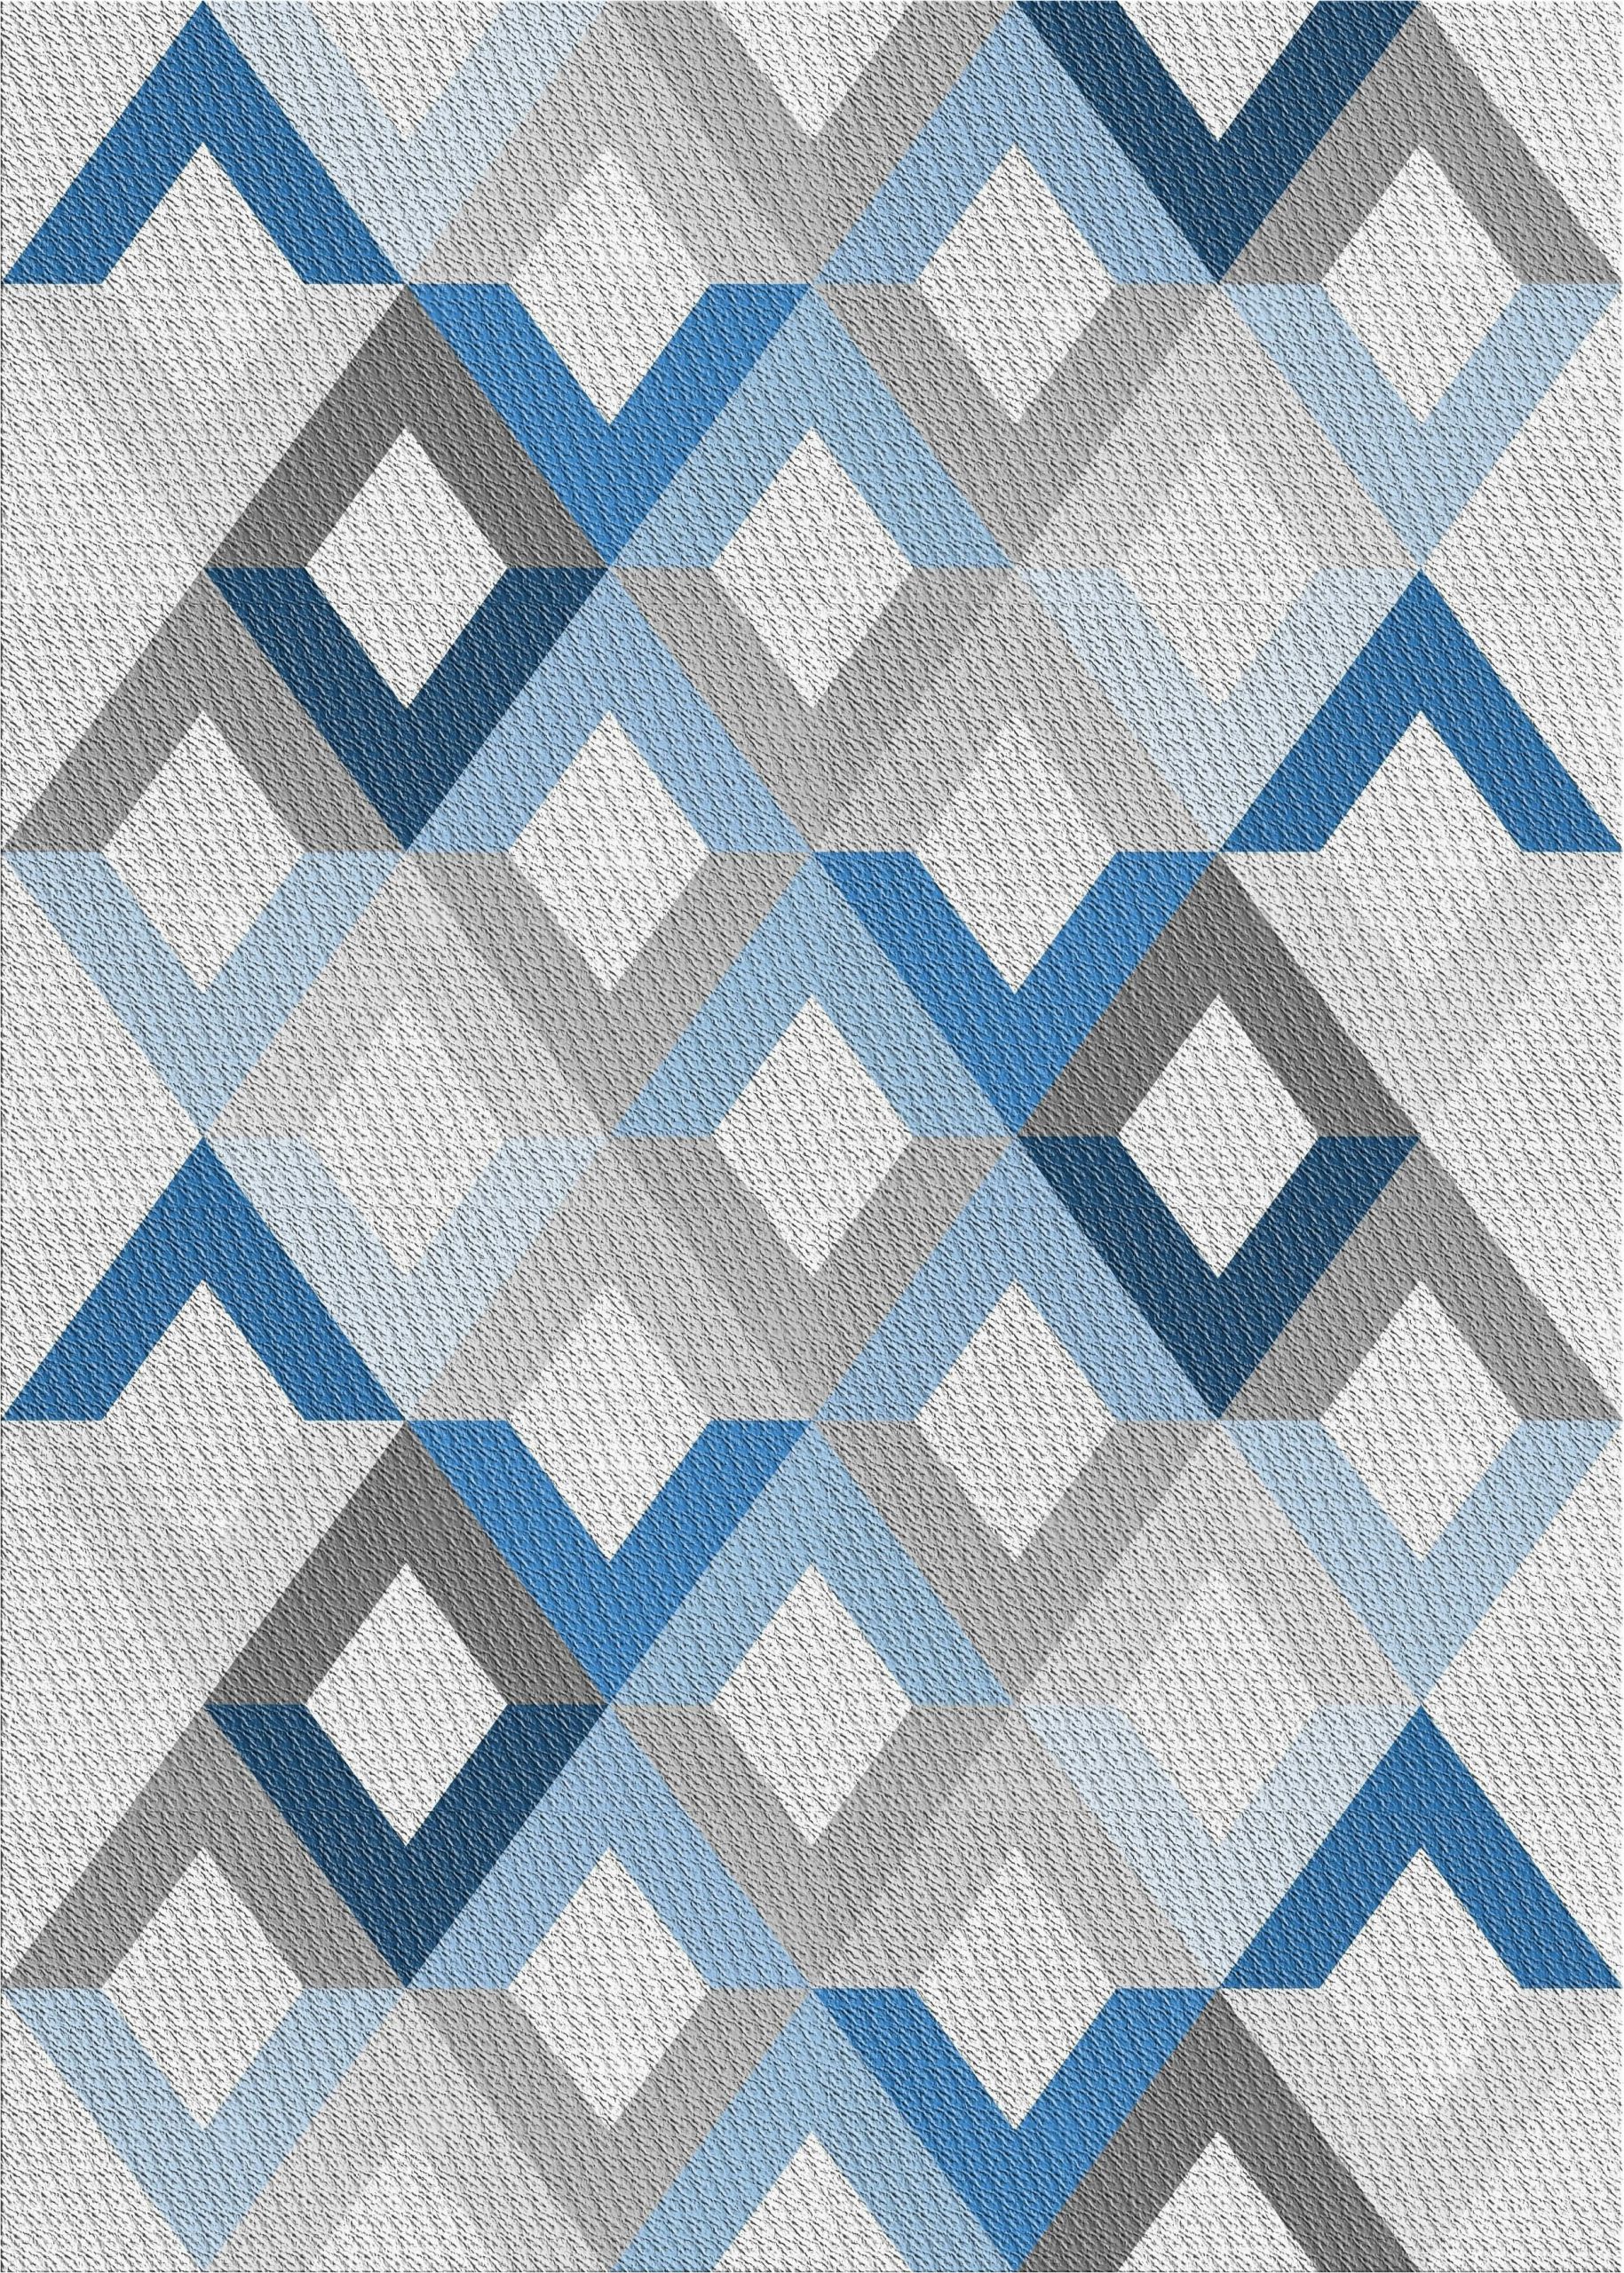 Blue Pattern area Rug Patterned Blue Gray area Rug